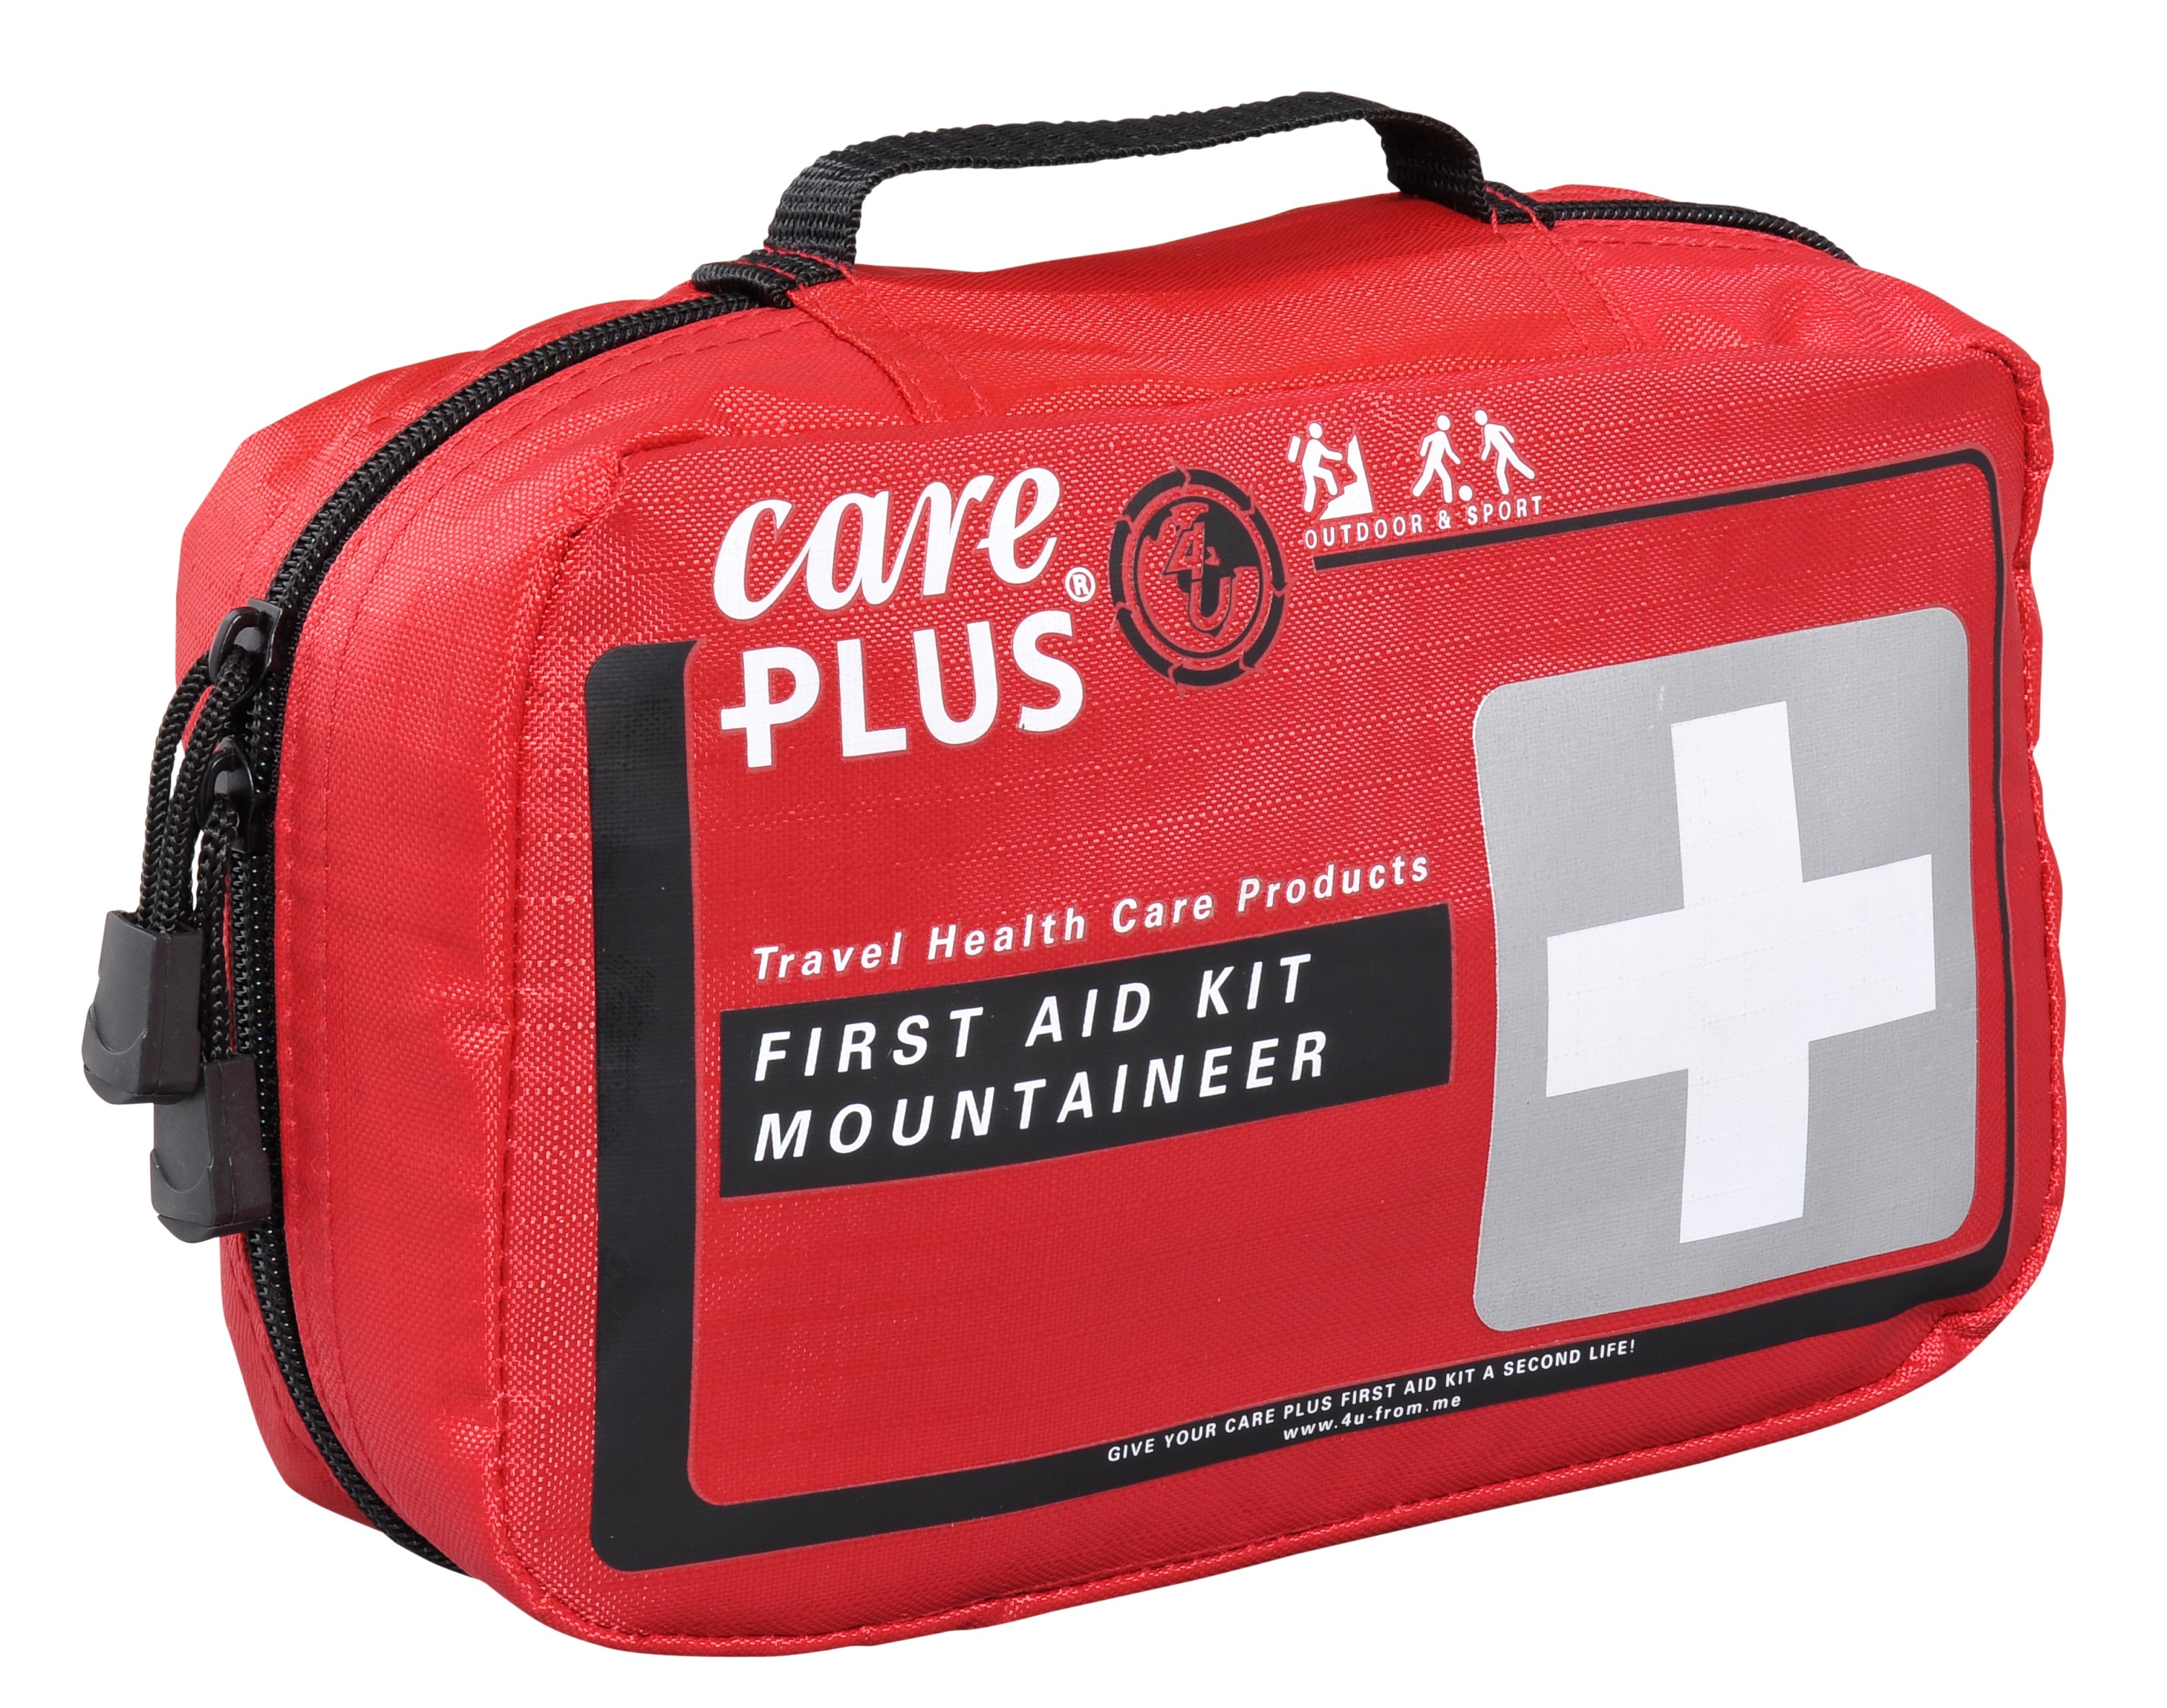 Care Plus First Aid Kit - Mountaineer - Trousse de secours